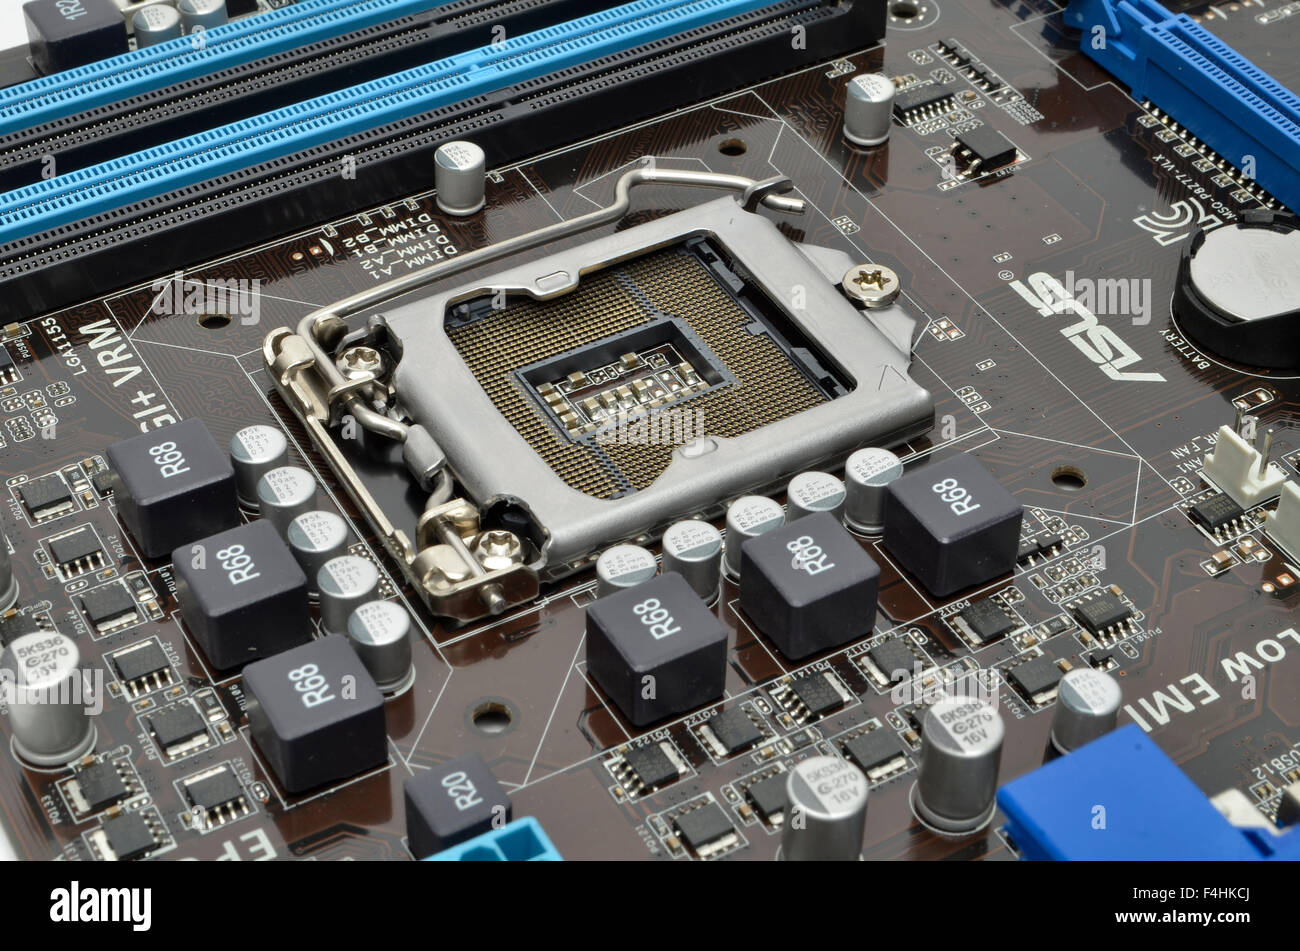 Intel LGA1155 processor socket on an ASUS motherboard. Stock Photo